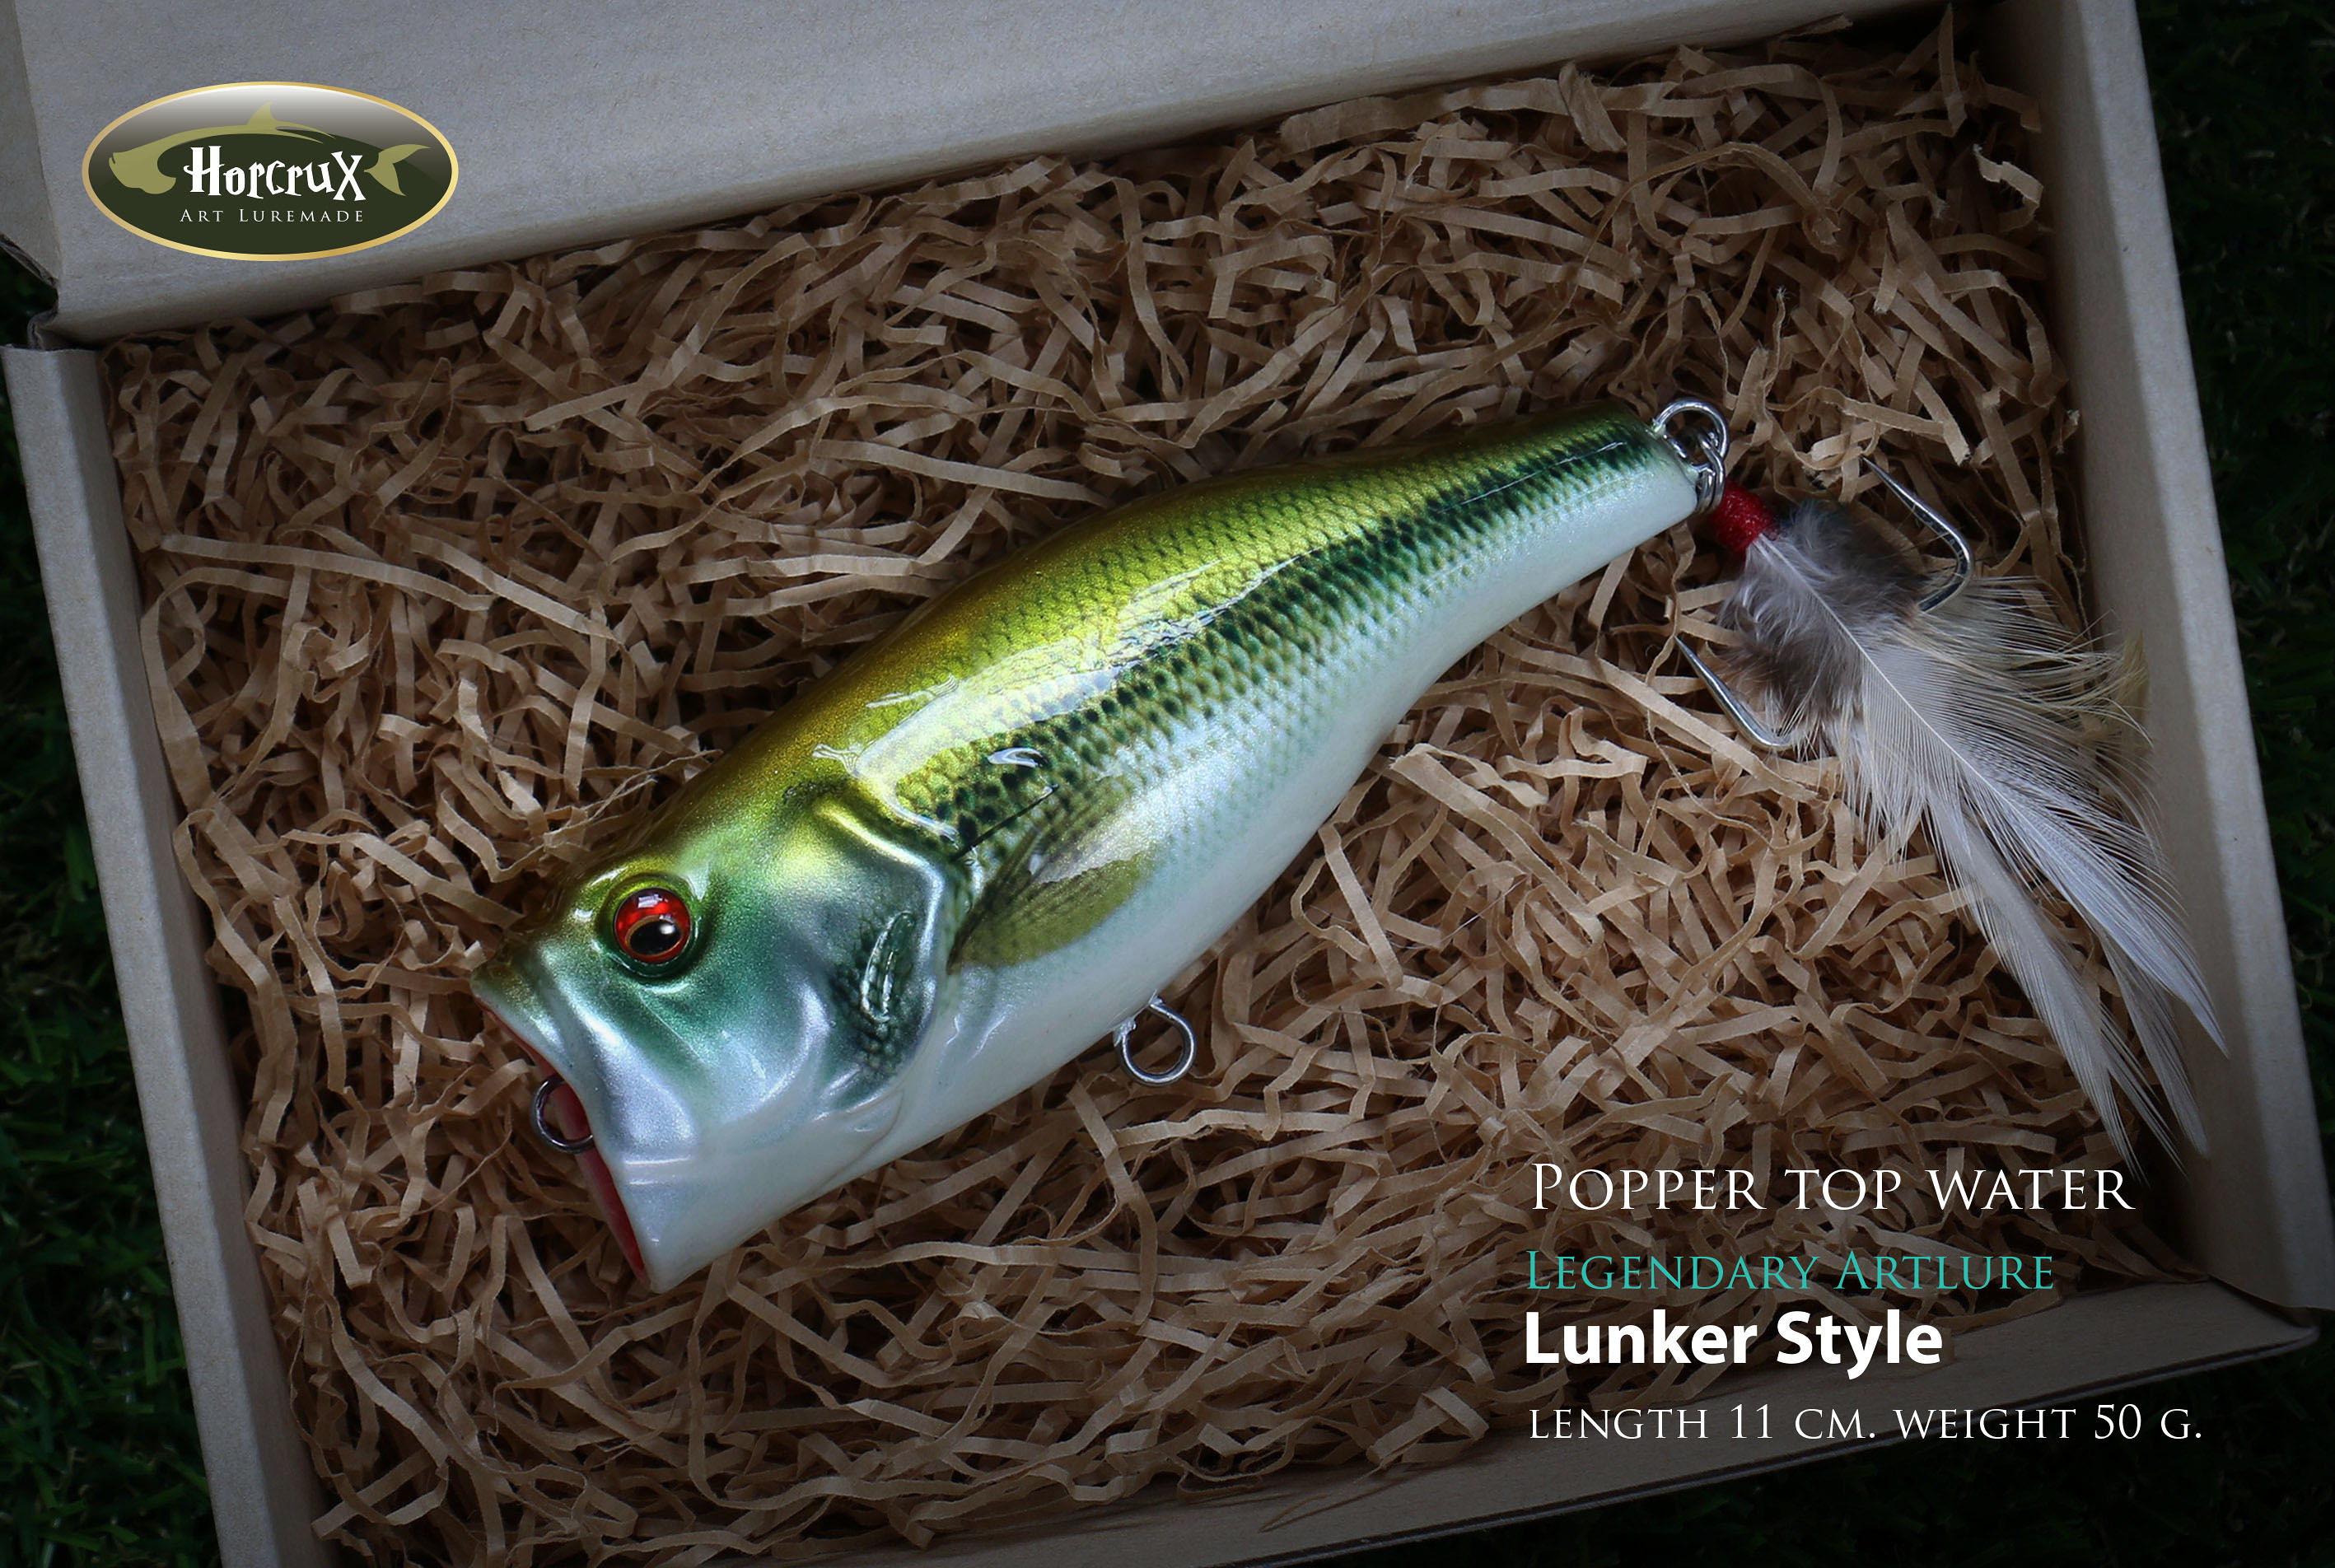 Popper legend : Lunker Style : Handmade Fishing Tackle